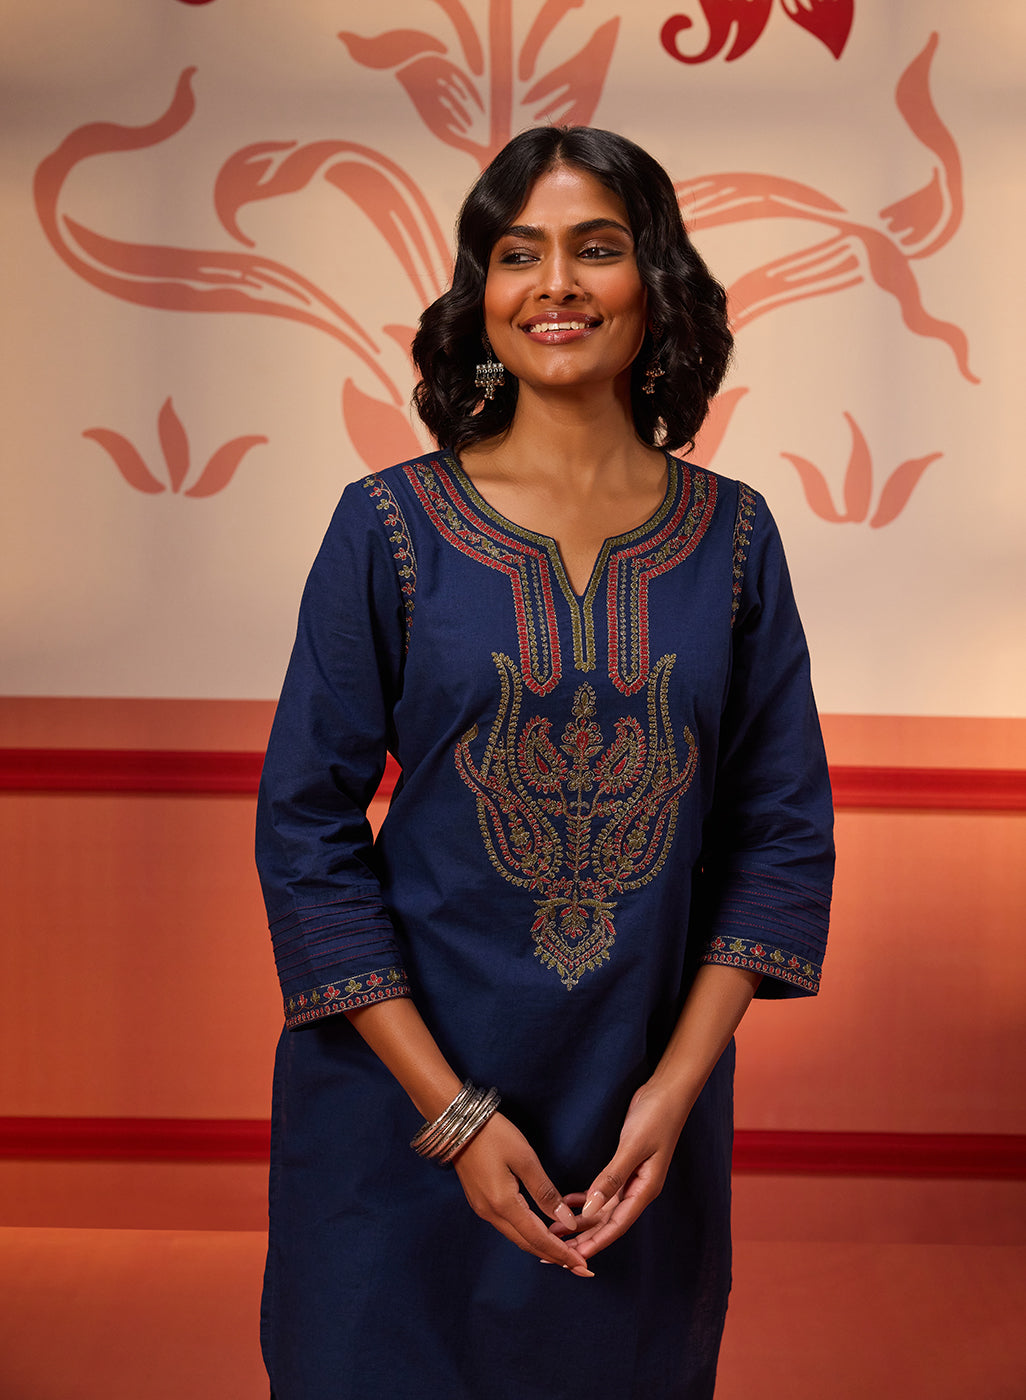 Woman smiling in Khurshid Navy Blue Embroidered Cotton Linen Designer Kurta